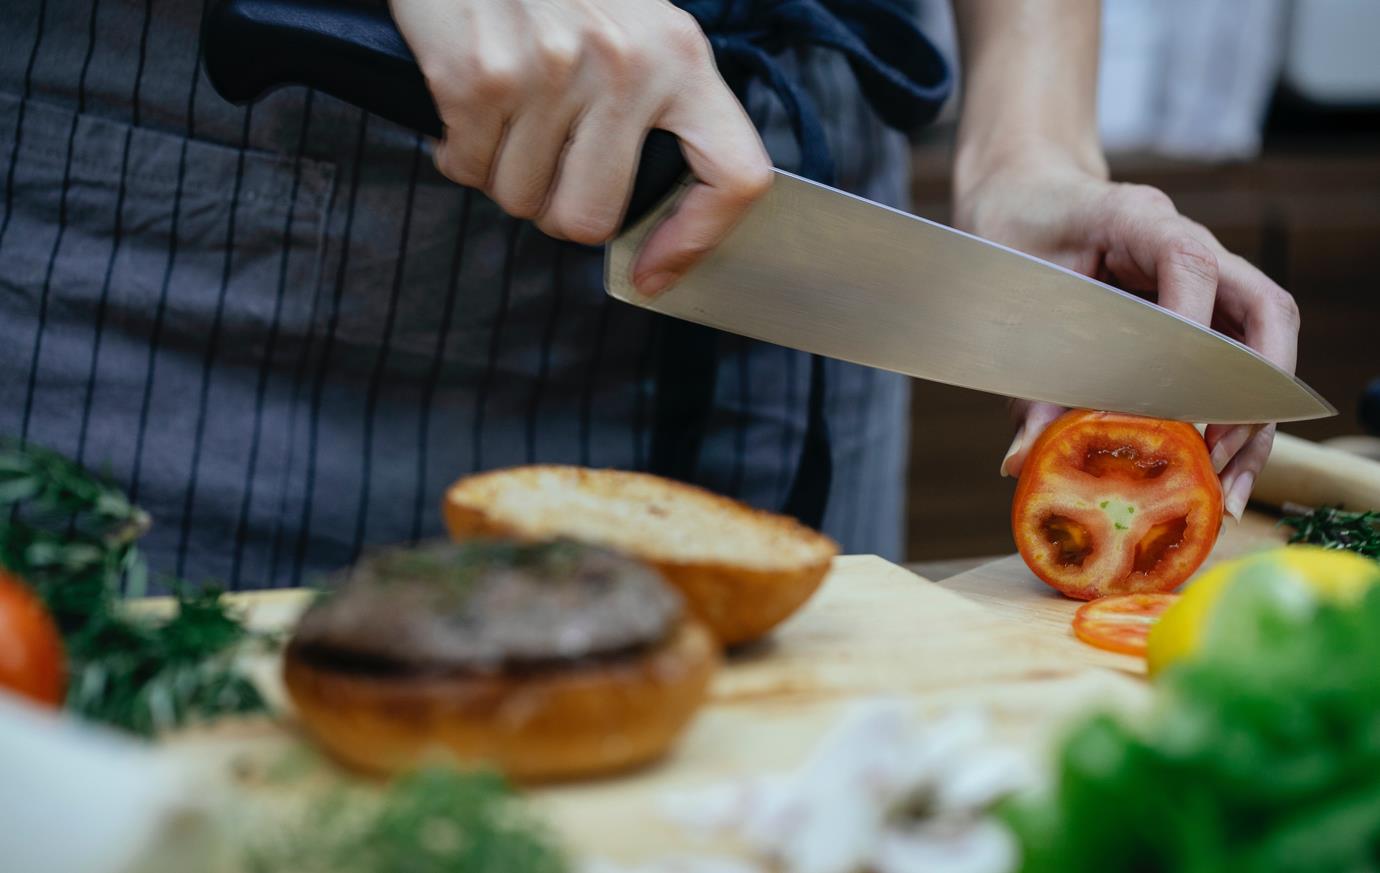 utility knife vs chef knife